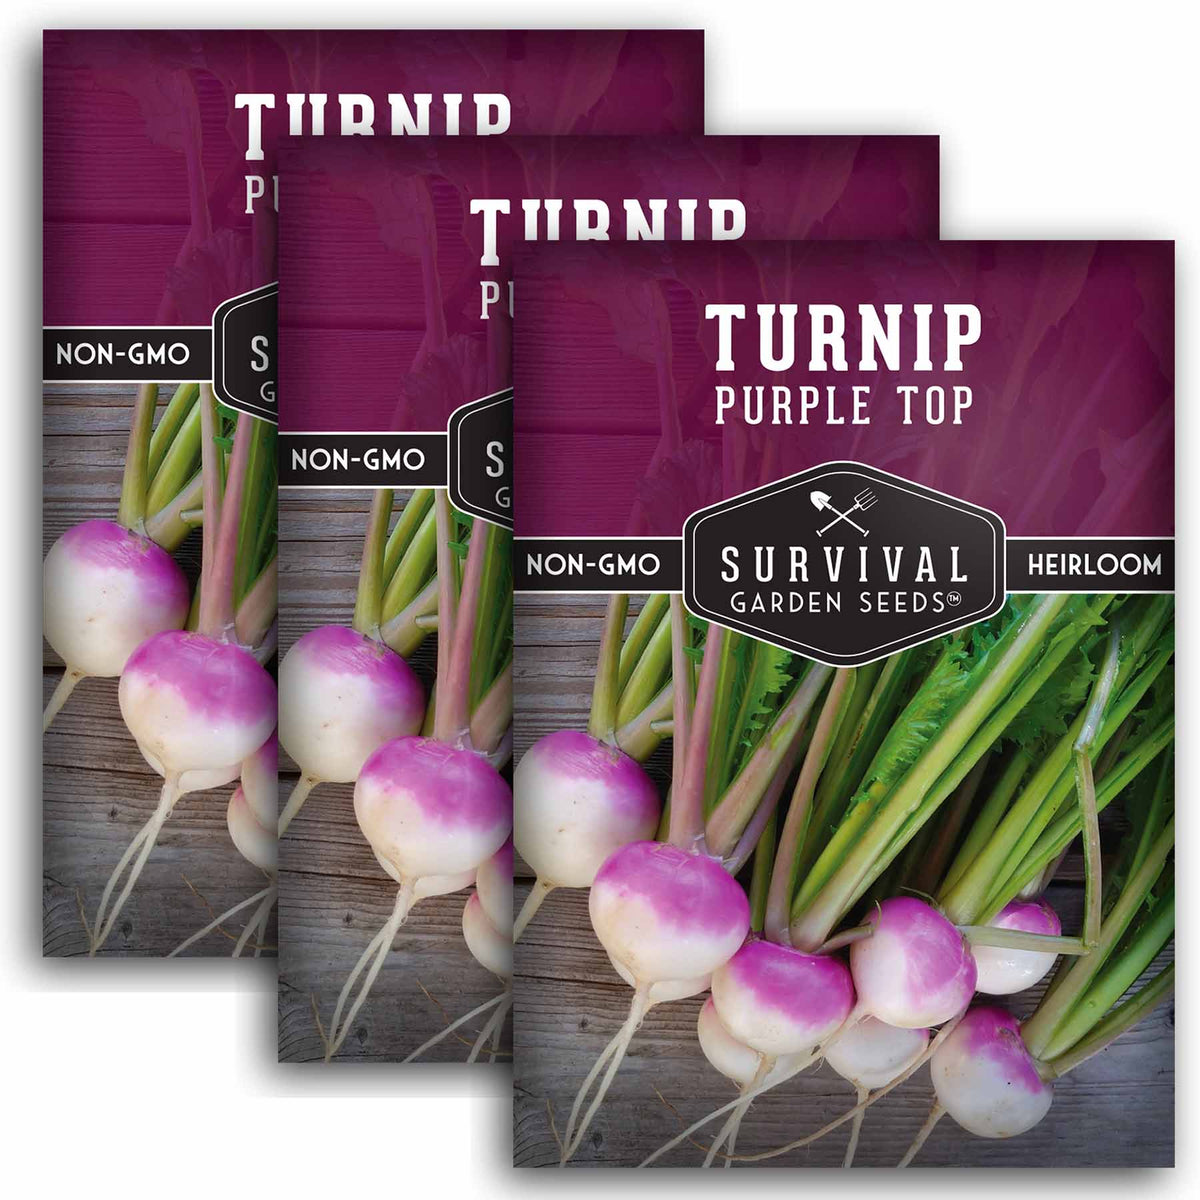 3 packets of Purple Top Turnip seeds